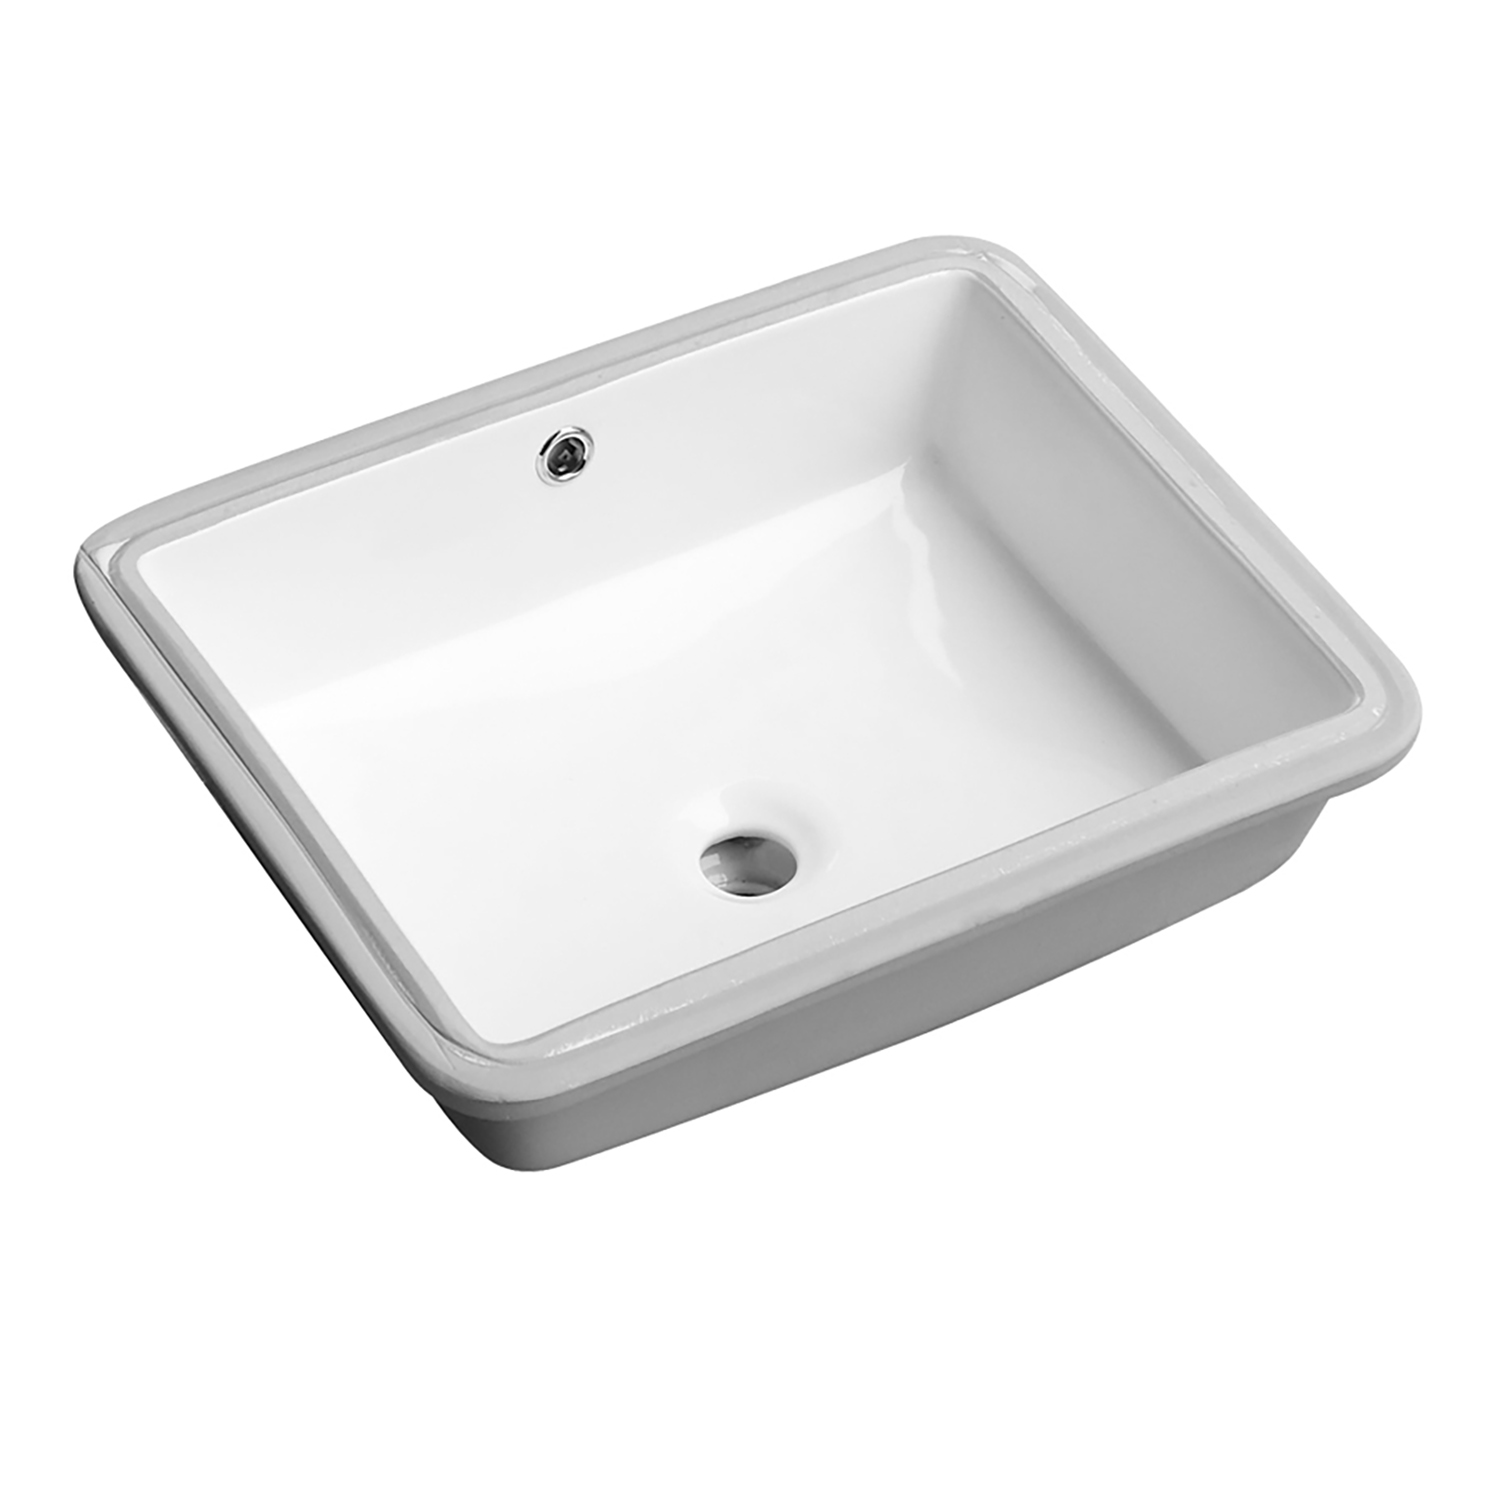 Duko C1337 19" x 15" White Square Ceramic Undermount Bathroom Vanity Vessel Sink